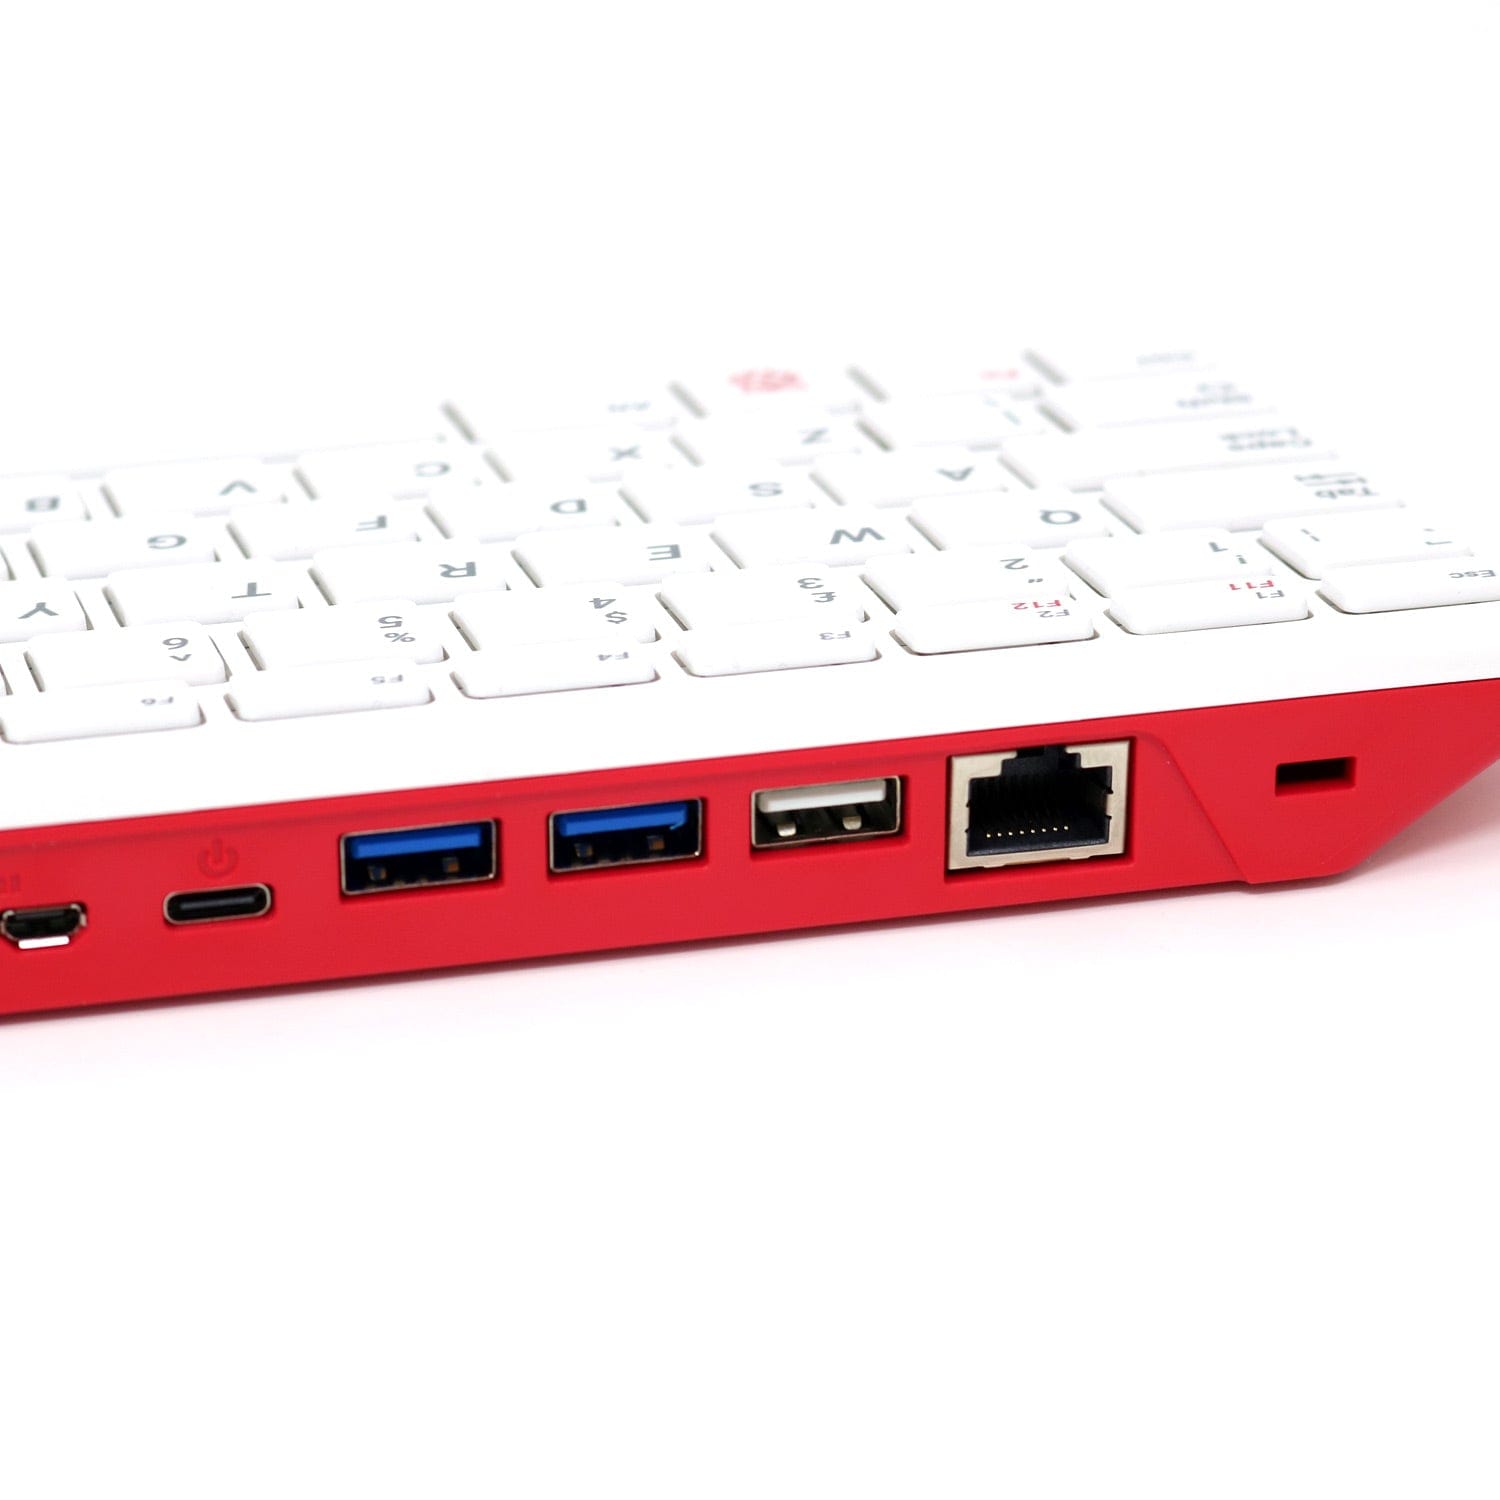 Raspberry Pi 400 Personal Computer Kit in a Keyboard - 4GB RAM